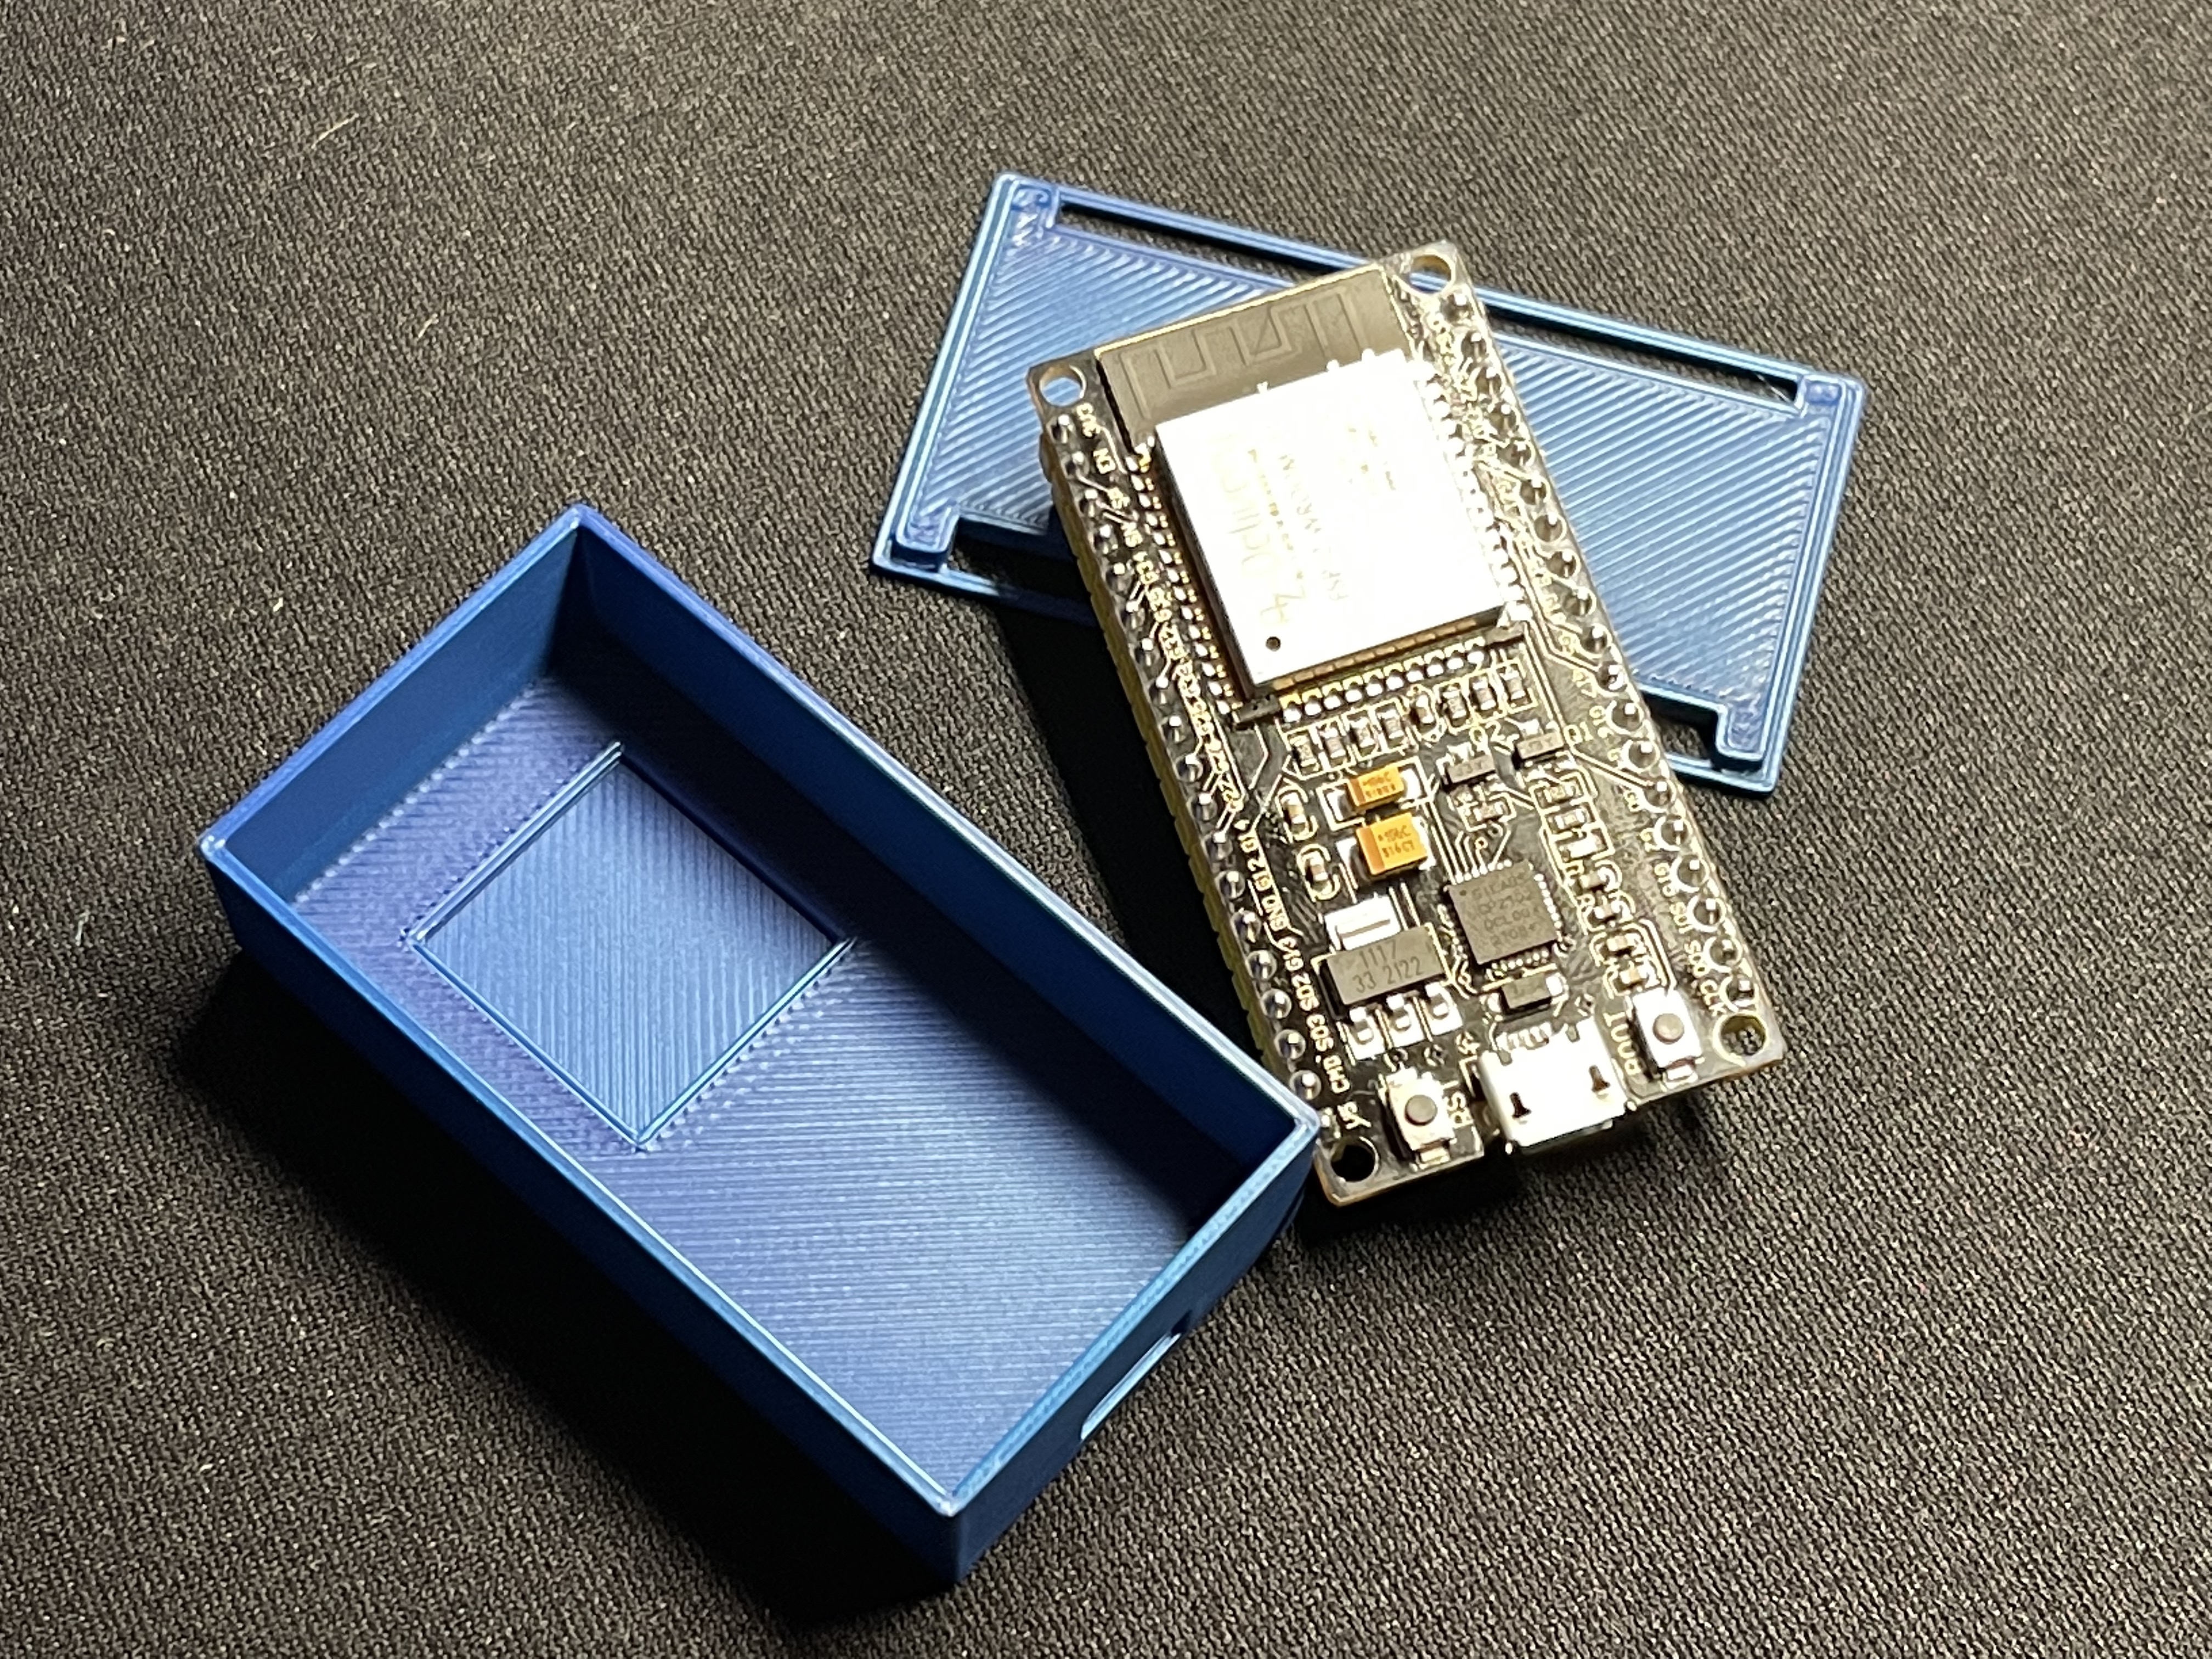 ESP32 NodeMCU Dev Kit C Case